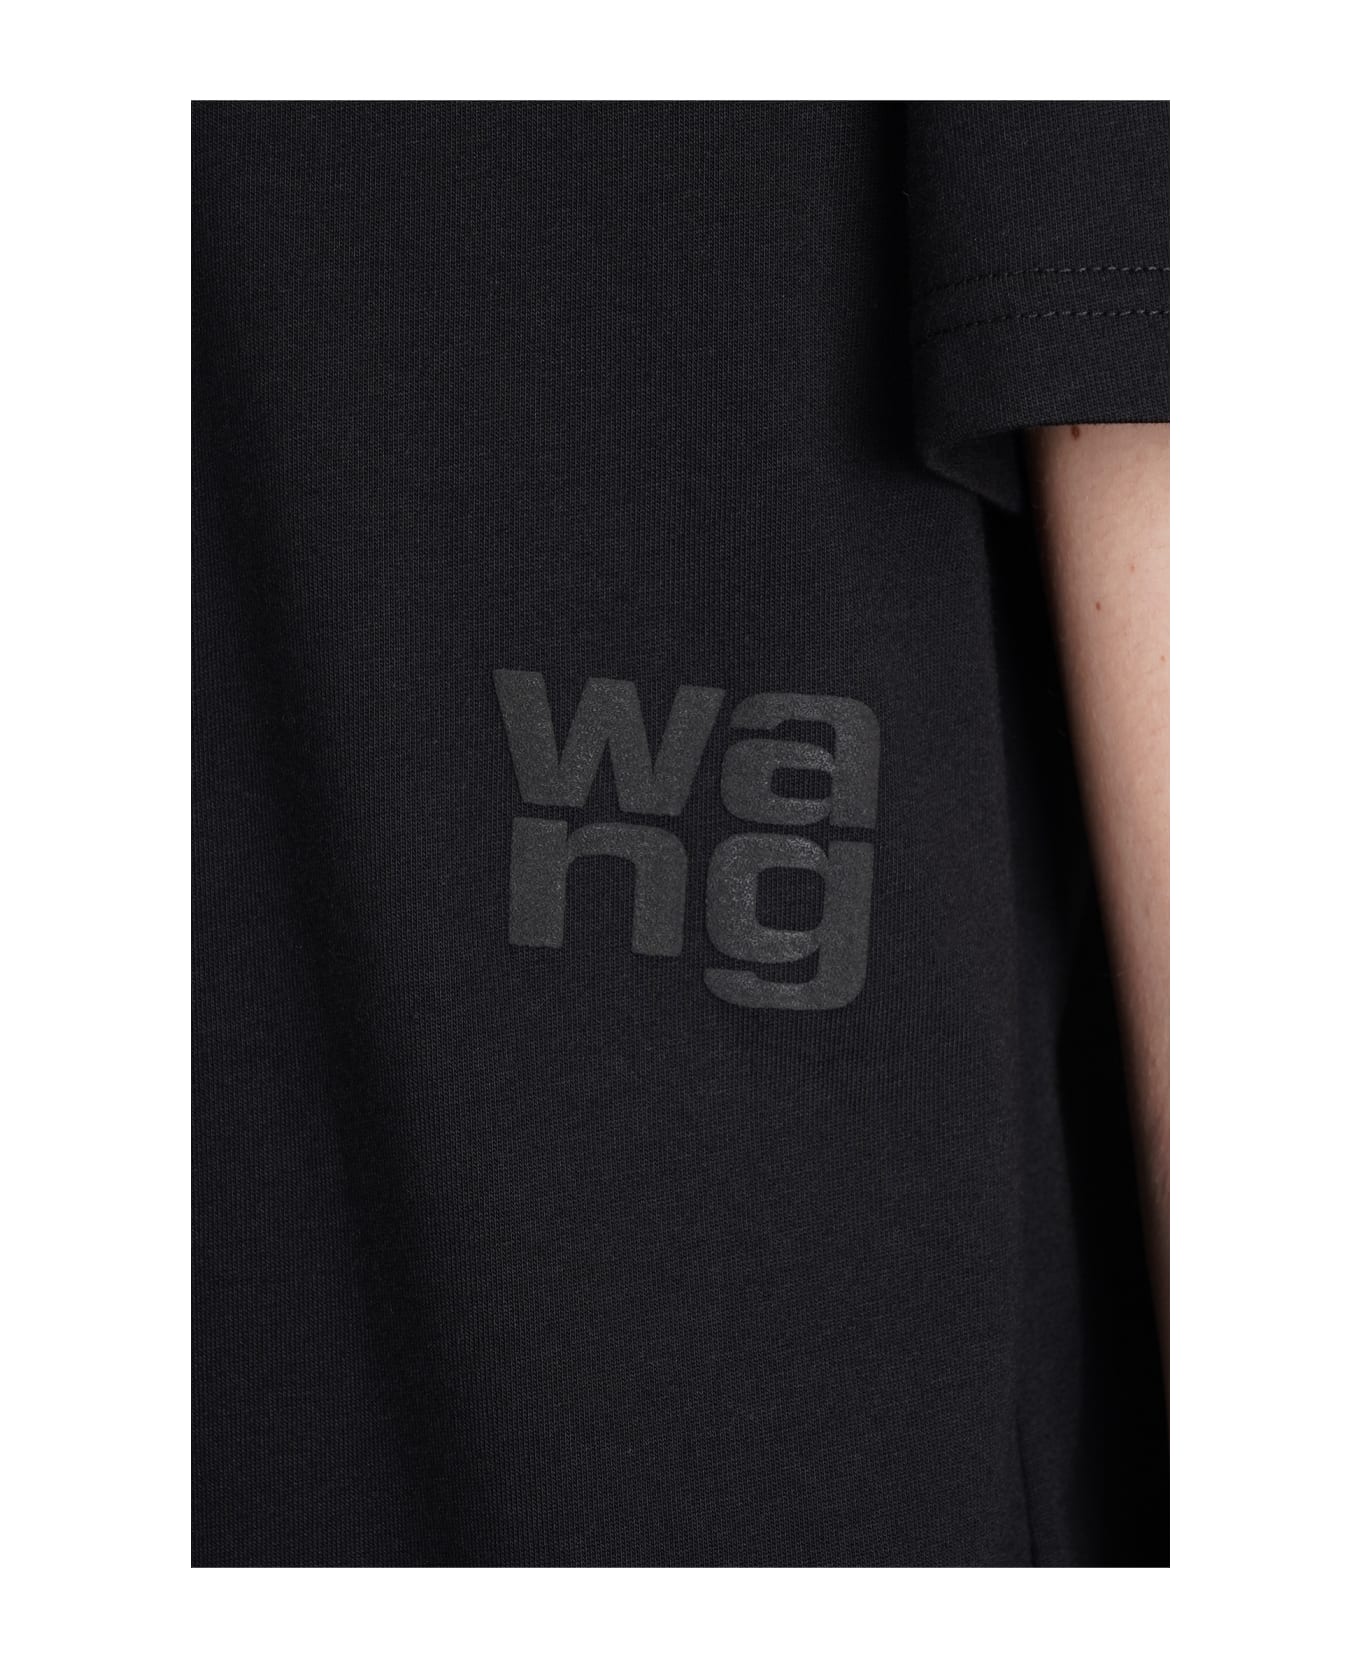 Alexander Wang Black Cotton T-shirt - Black